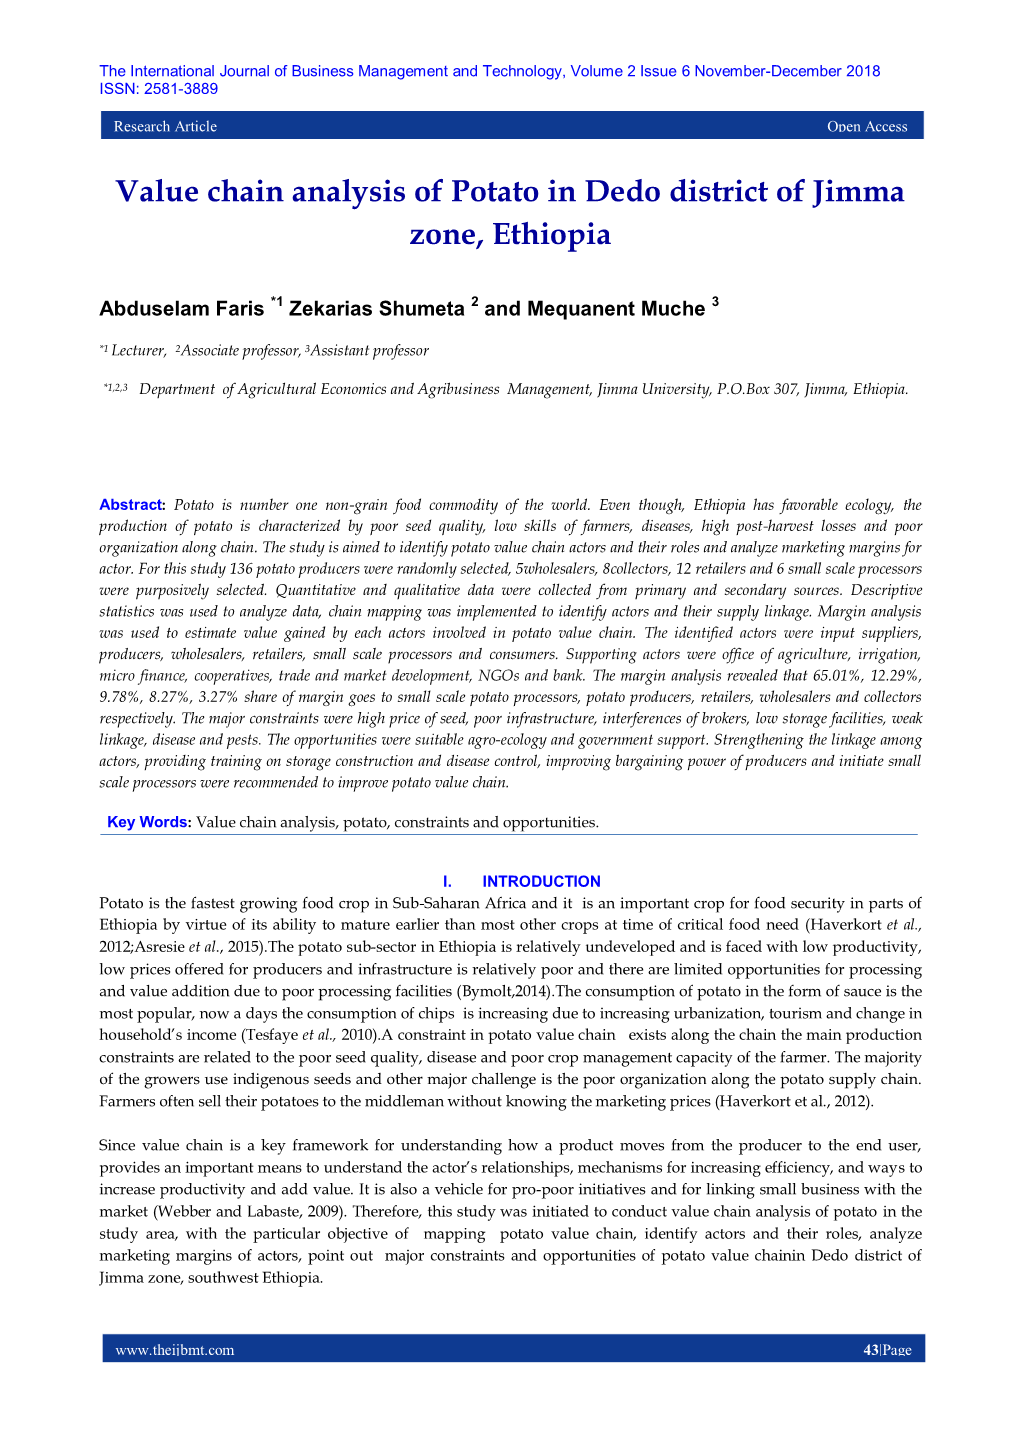 Value Chain Analysis of Potato in Dedo District of Jimma Zone, Ethiopia